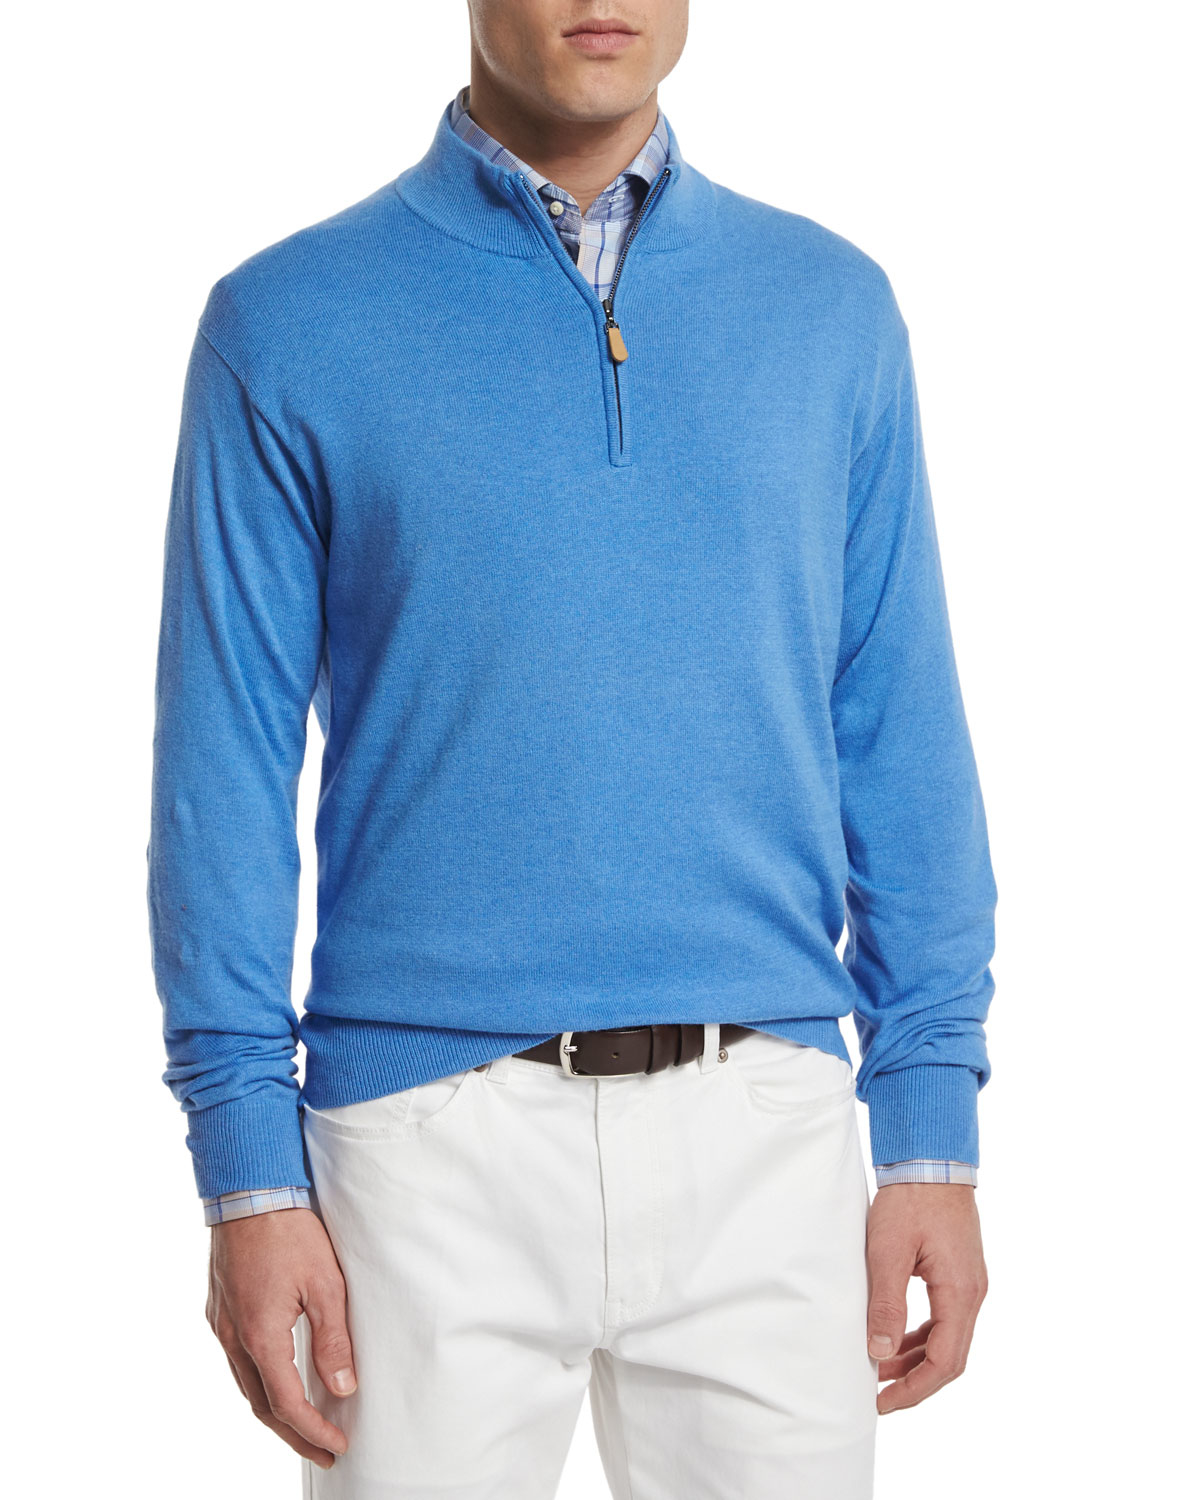 Lyst - Peter Millar Cotton/cashmere Quarter-zip Pullover Sweater in ...